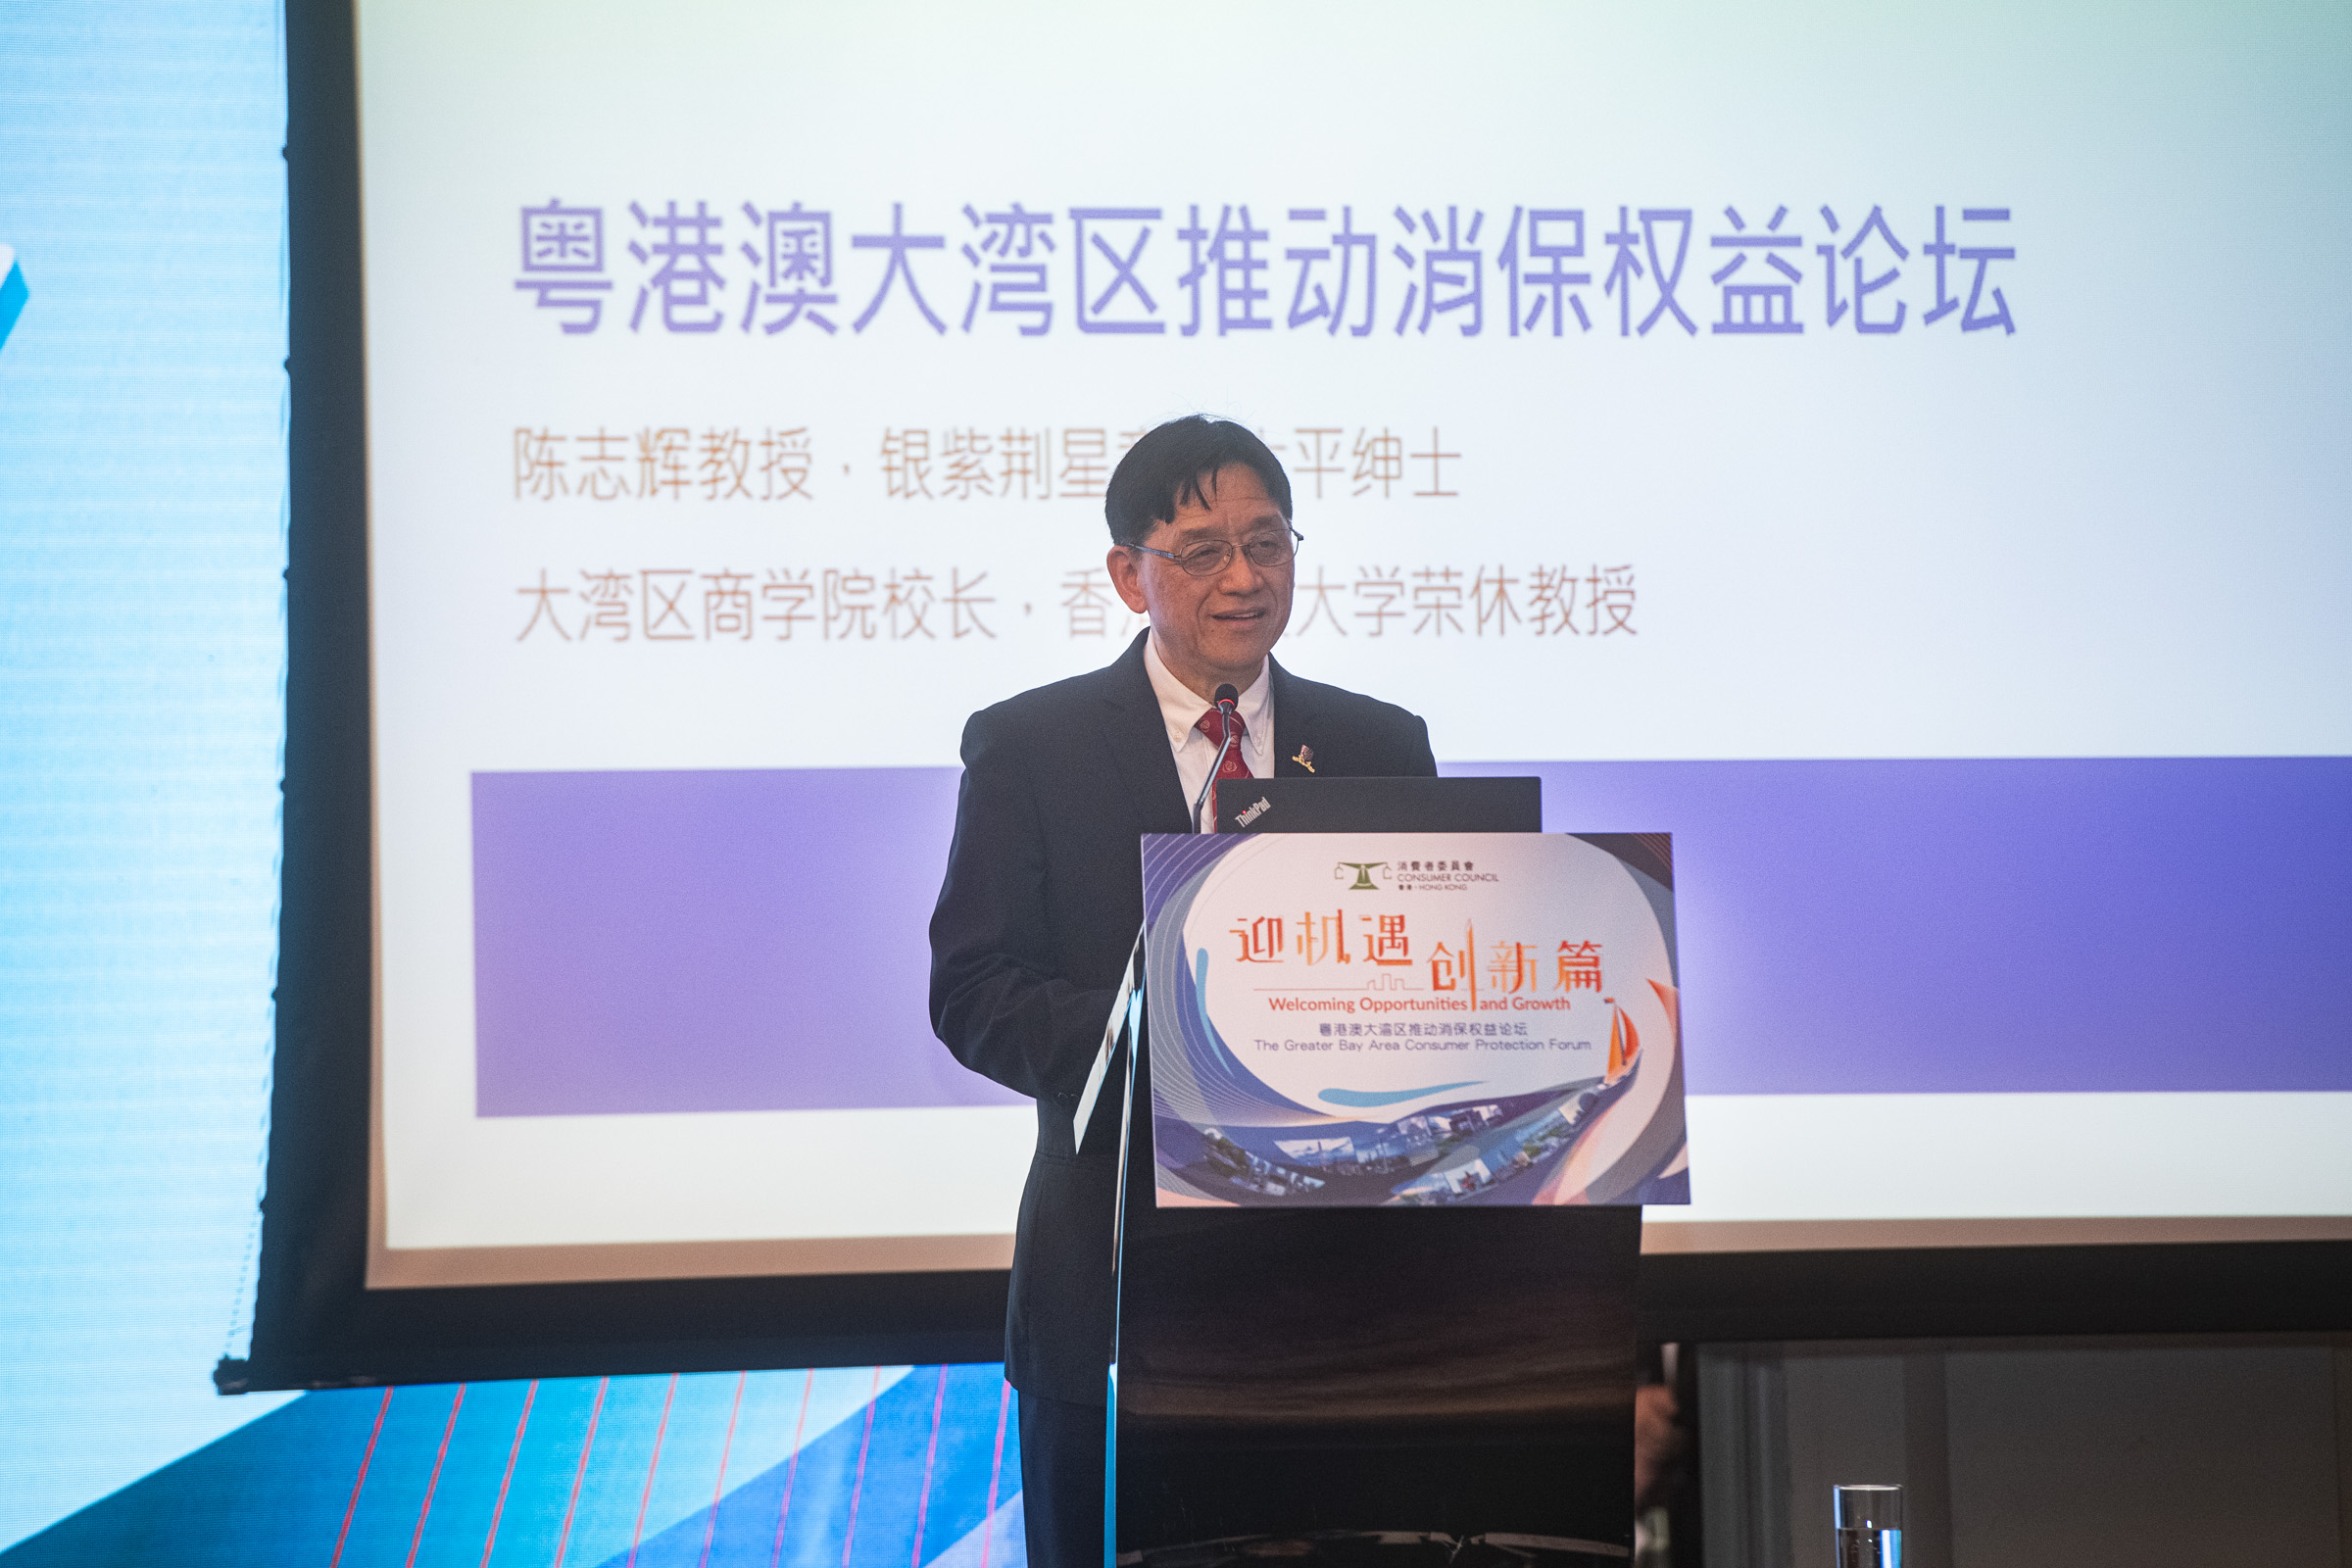 Professor Andrew Chan Chi-fai, President of GBA Business School presents a speech